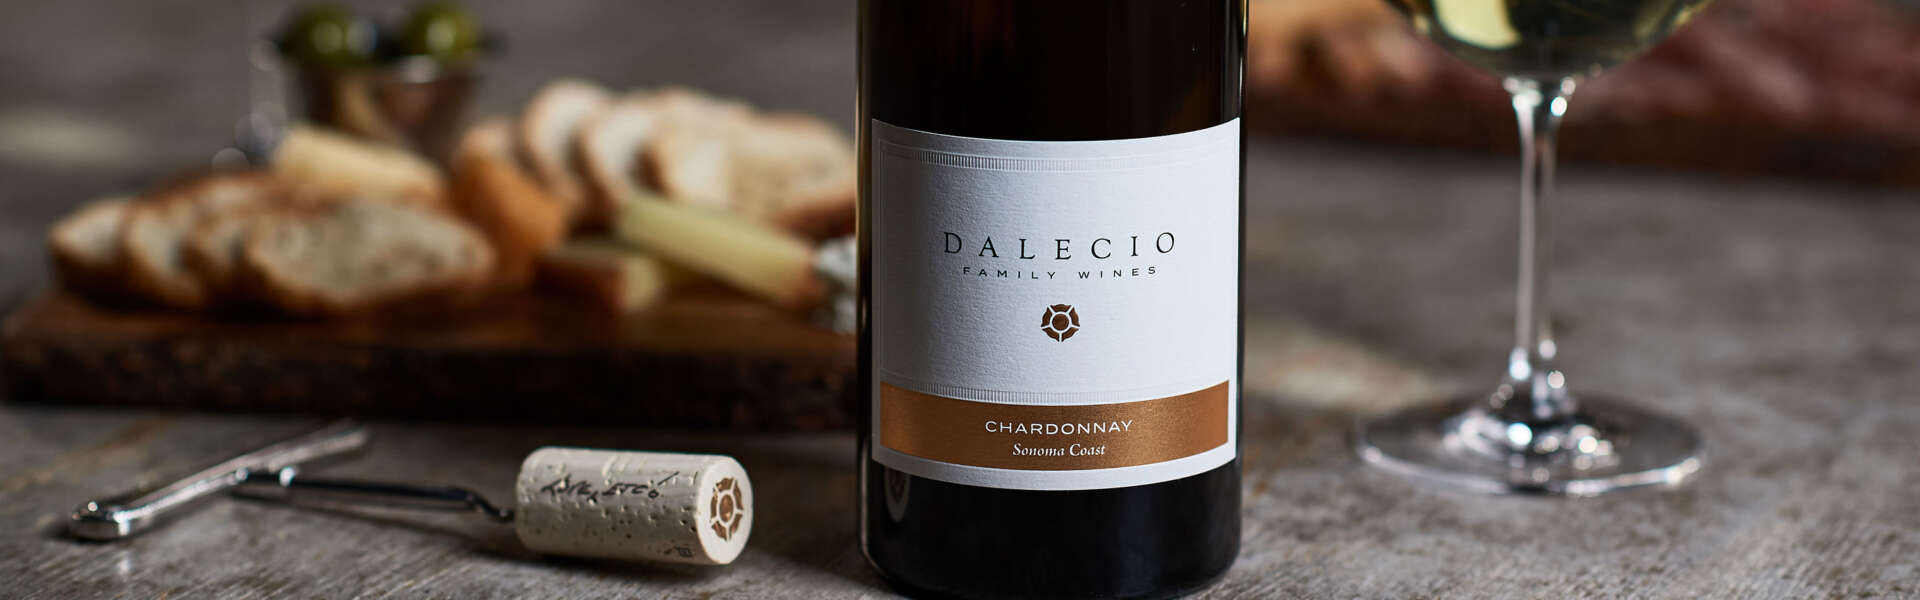 Dalecio Chardonnay on table with cork